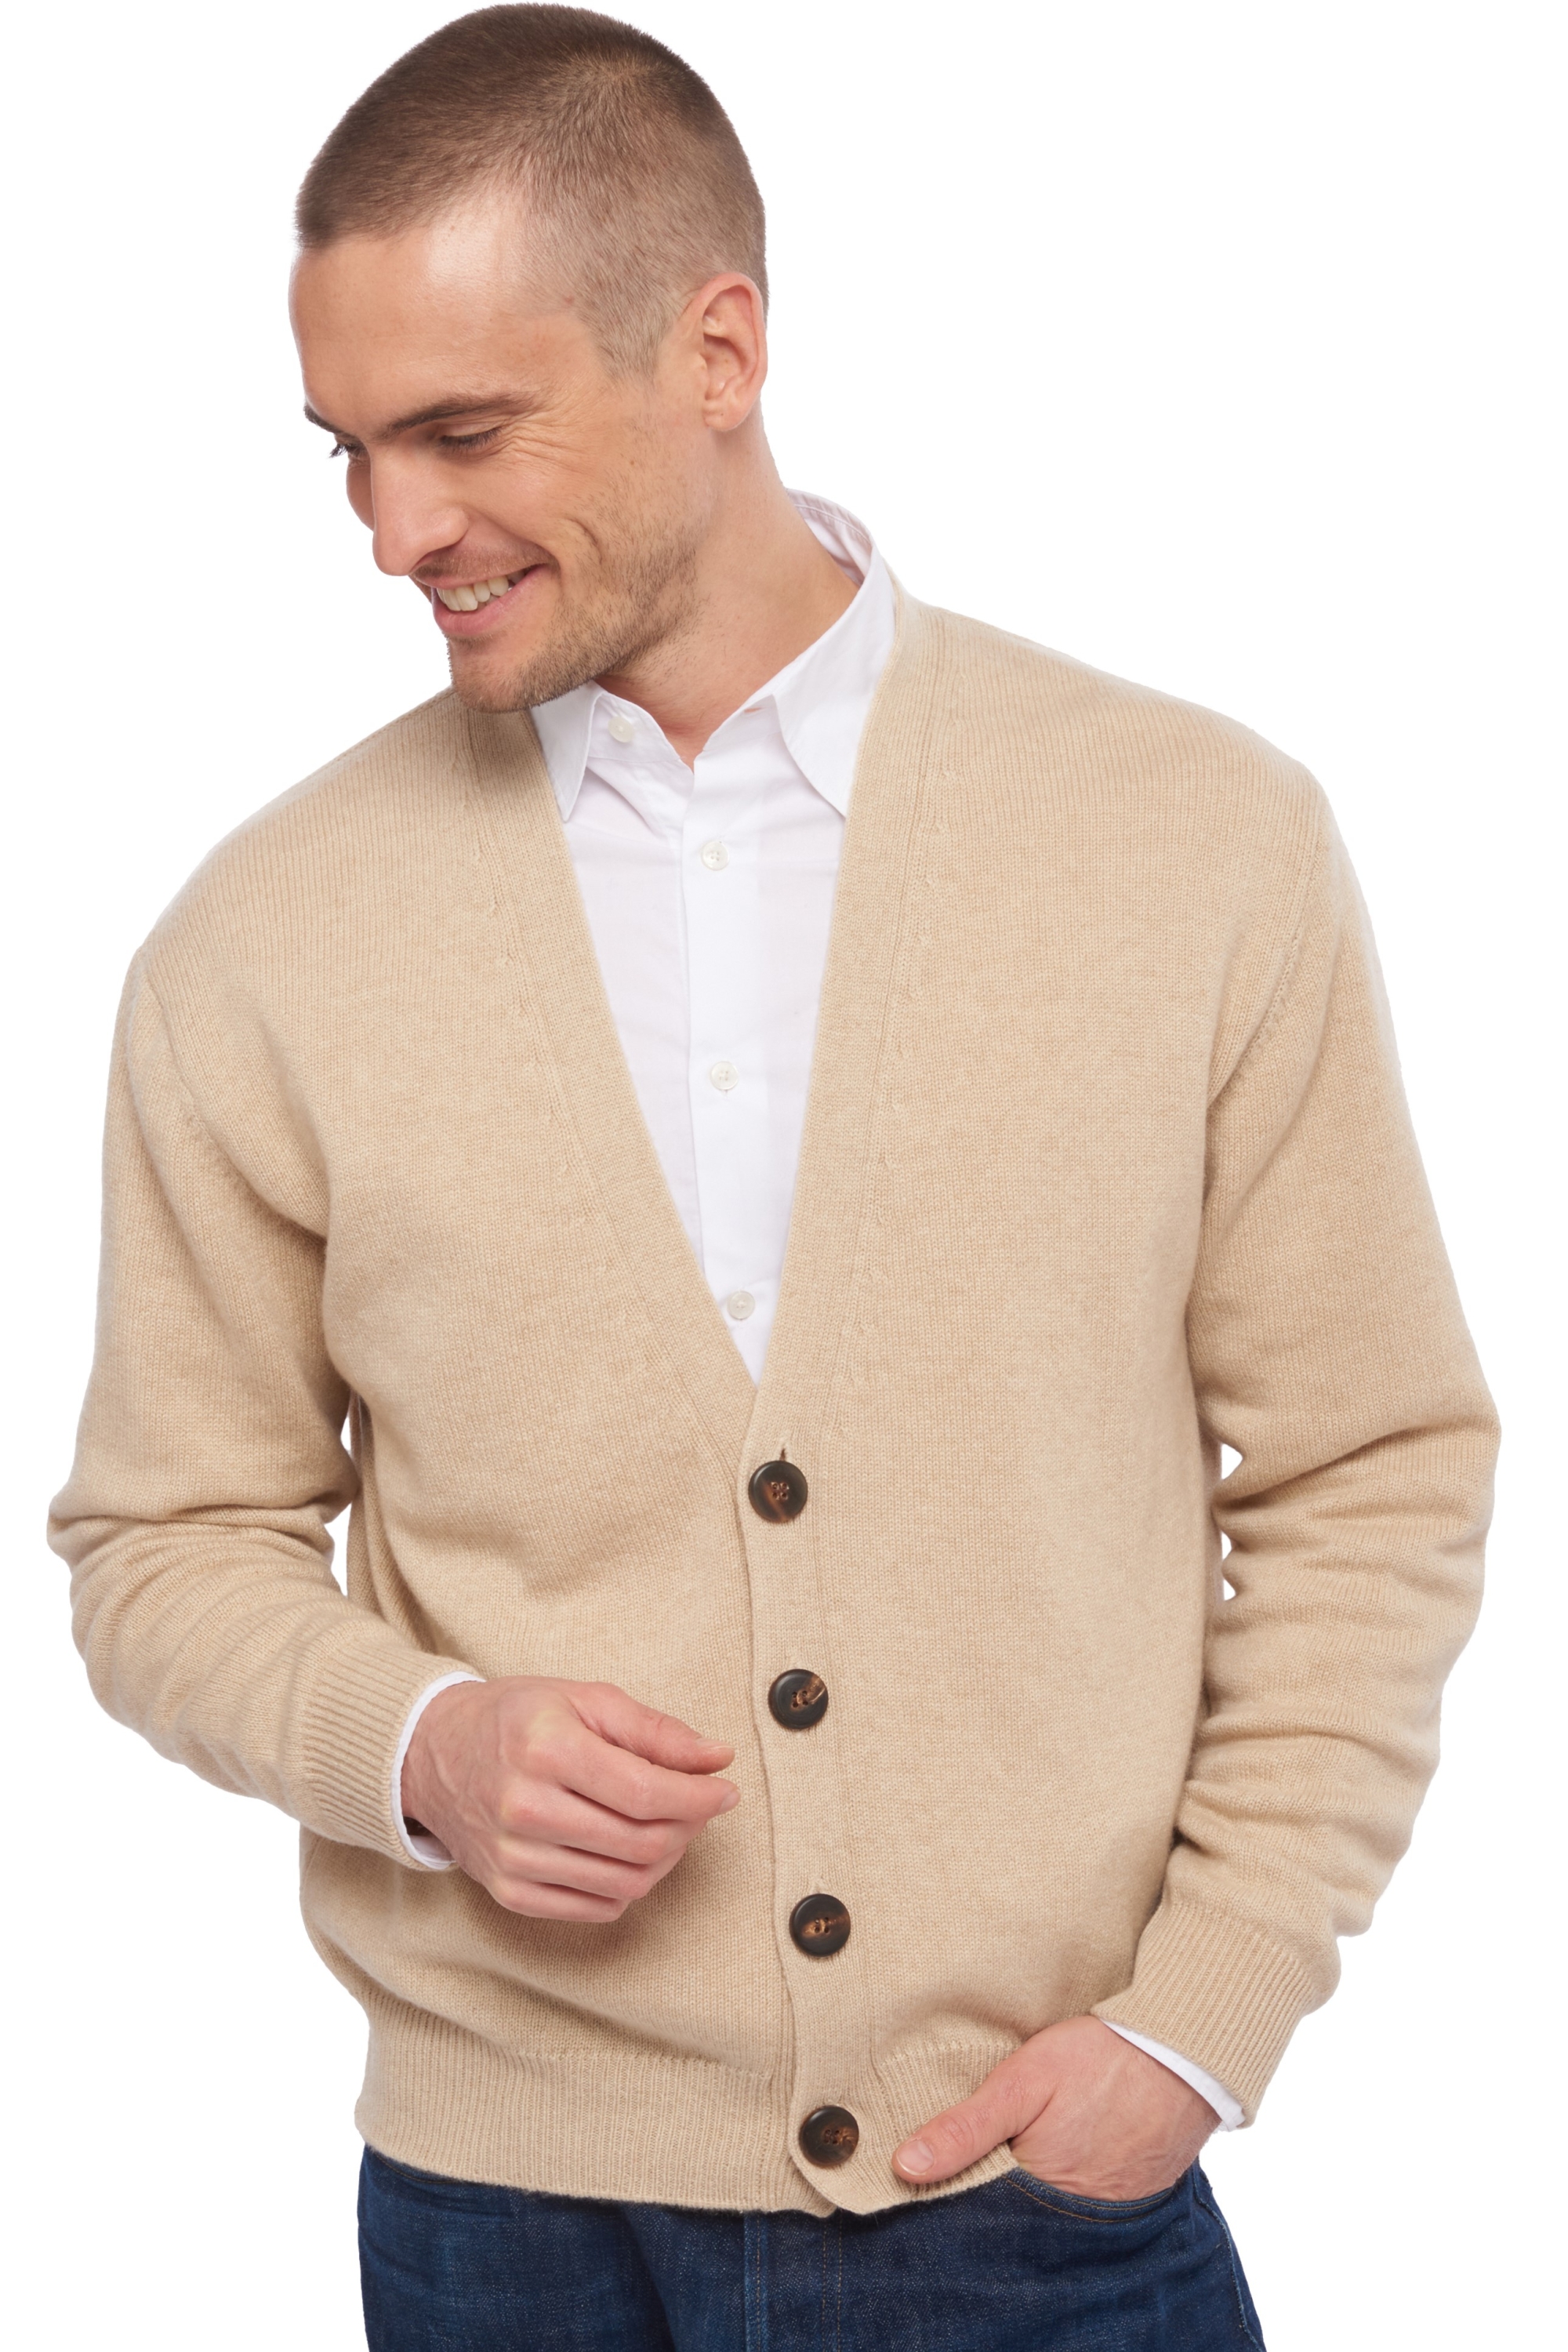 Yak men waistcoat sleeveless sweaters podrick vintage beige chine 3xl